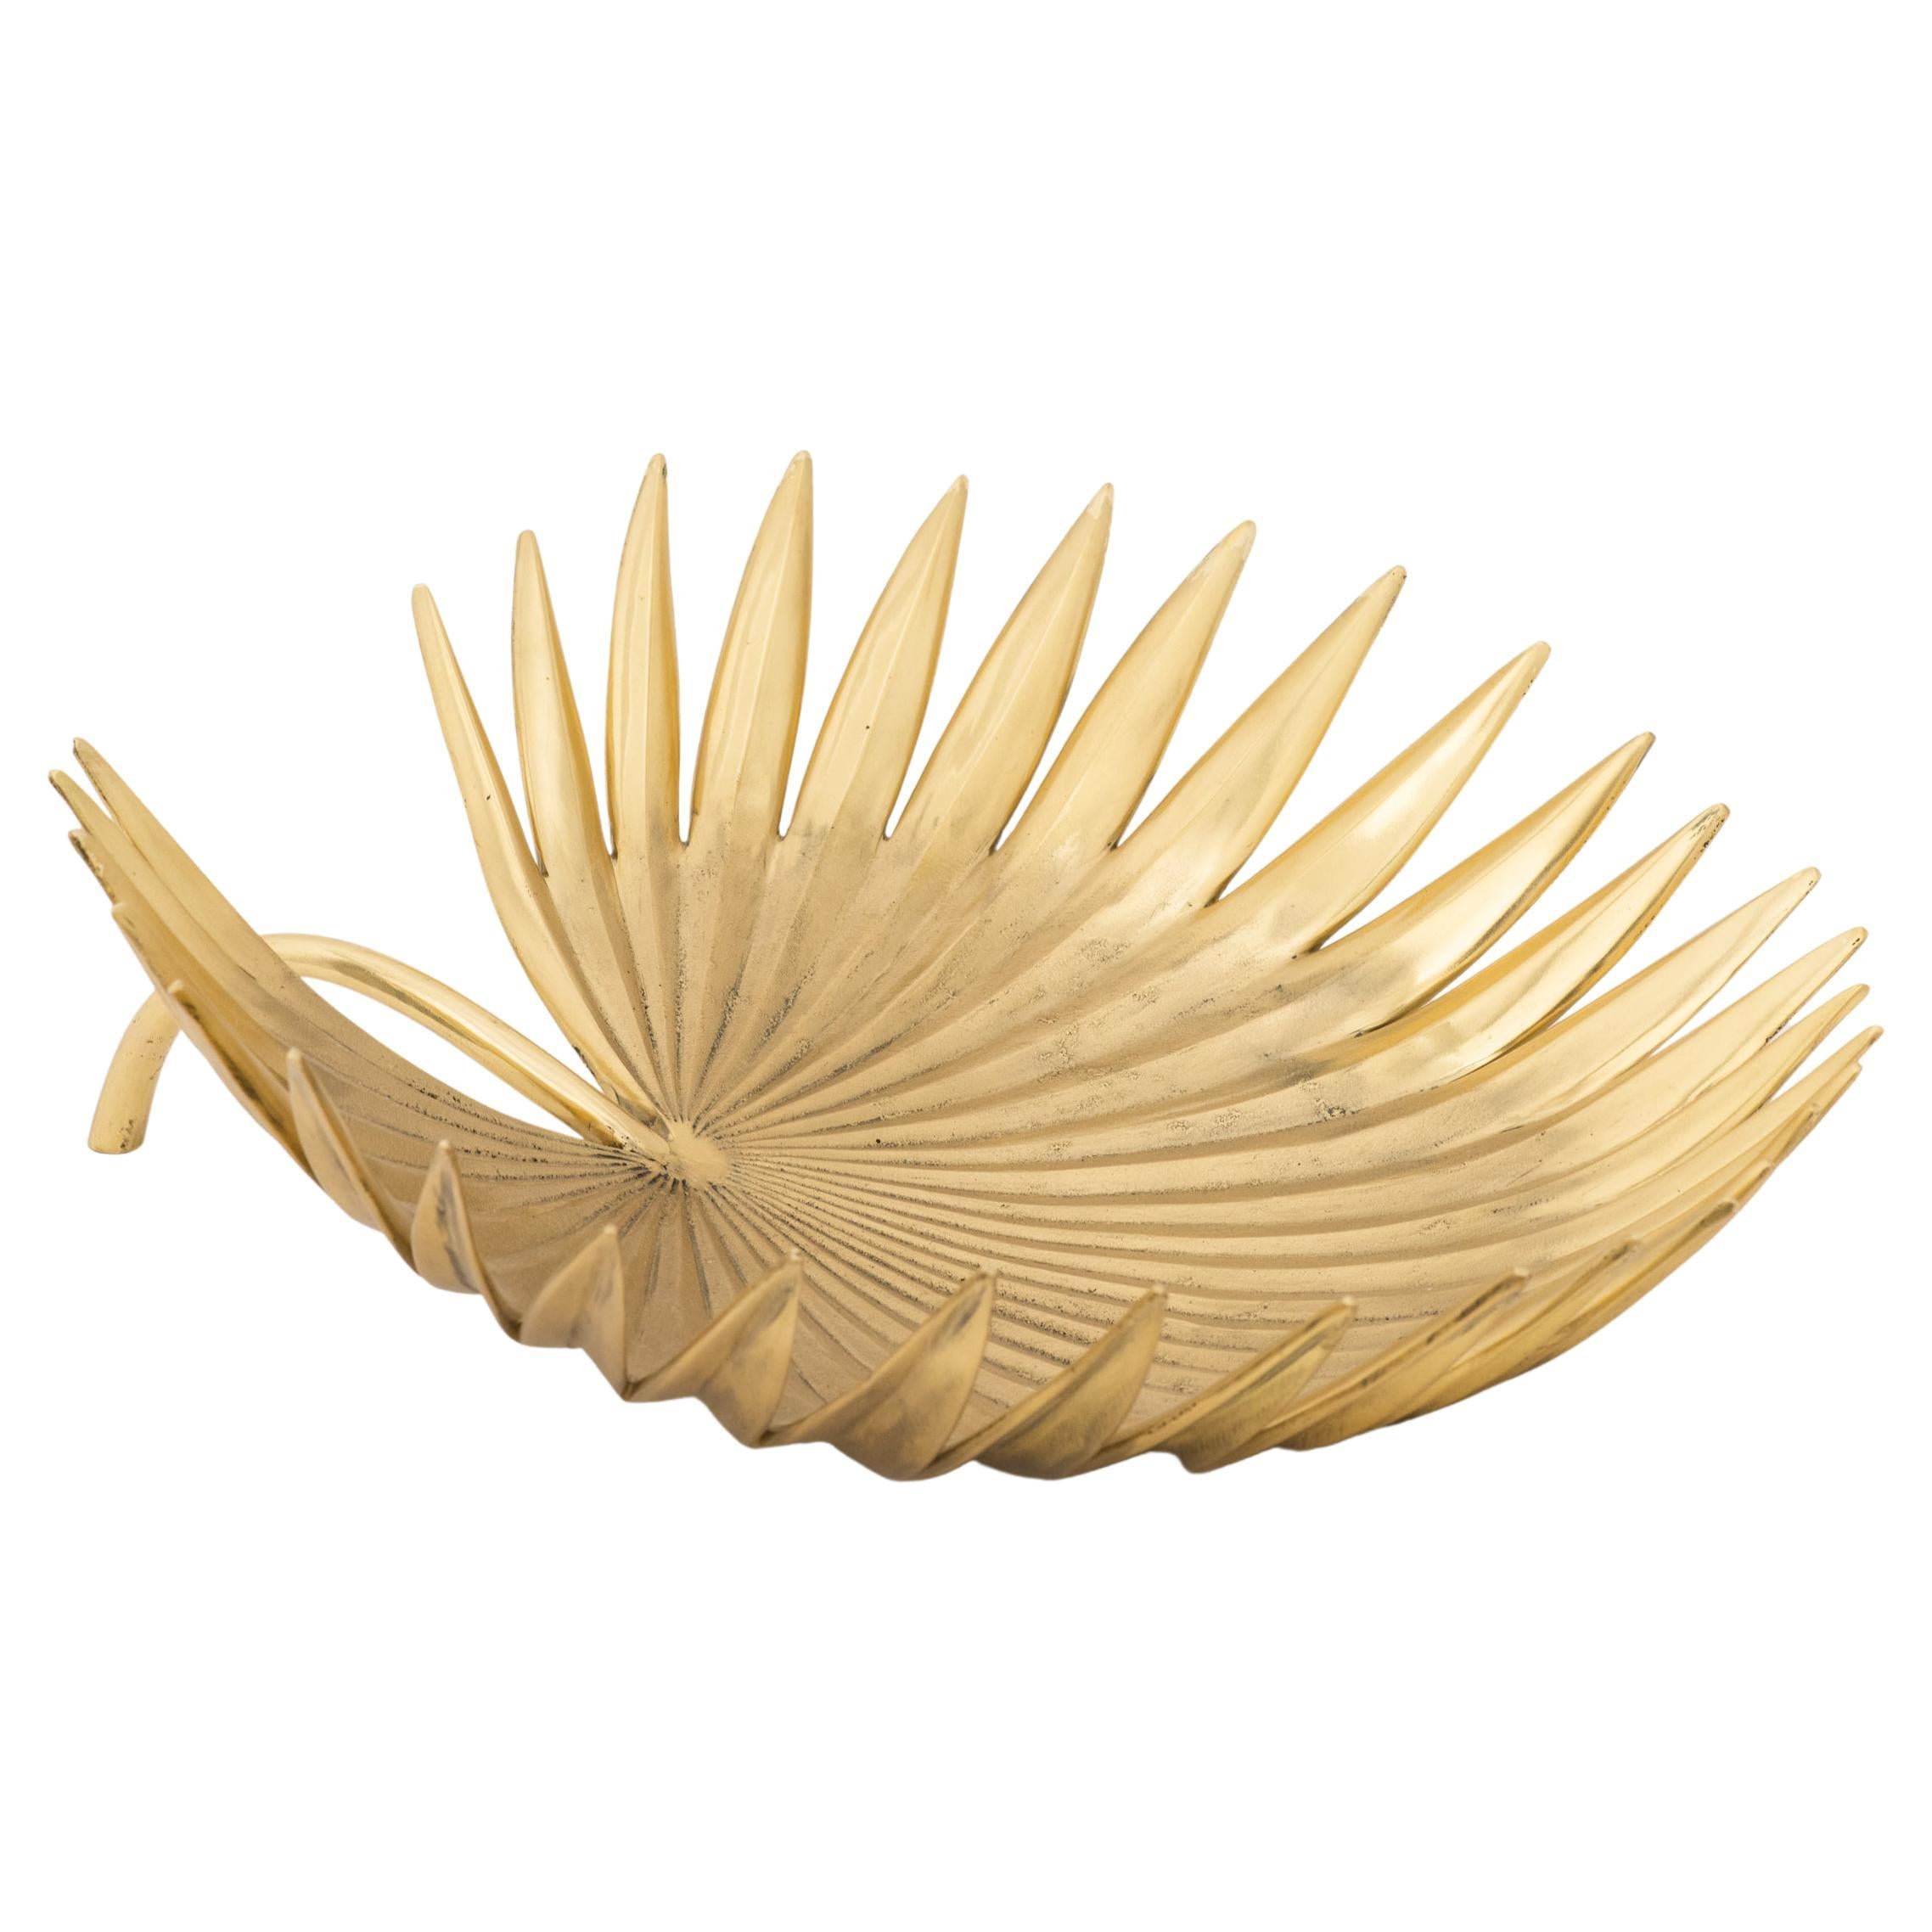 Handgefertigte dekorative Palmenblatt-Skulptur-Schale aus gegossenem Messing, groß